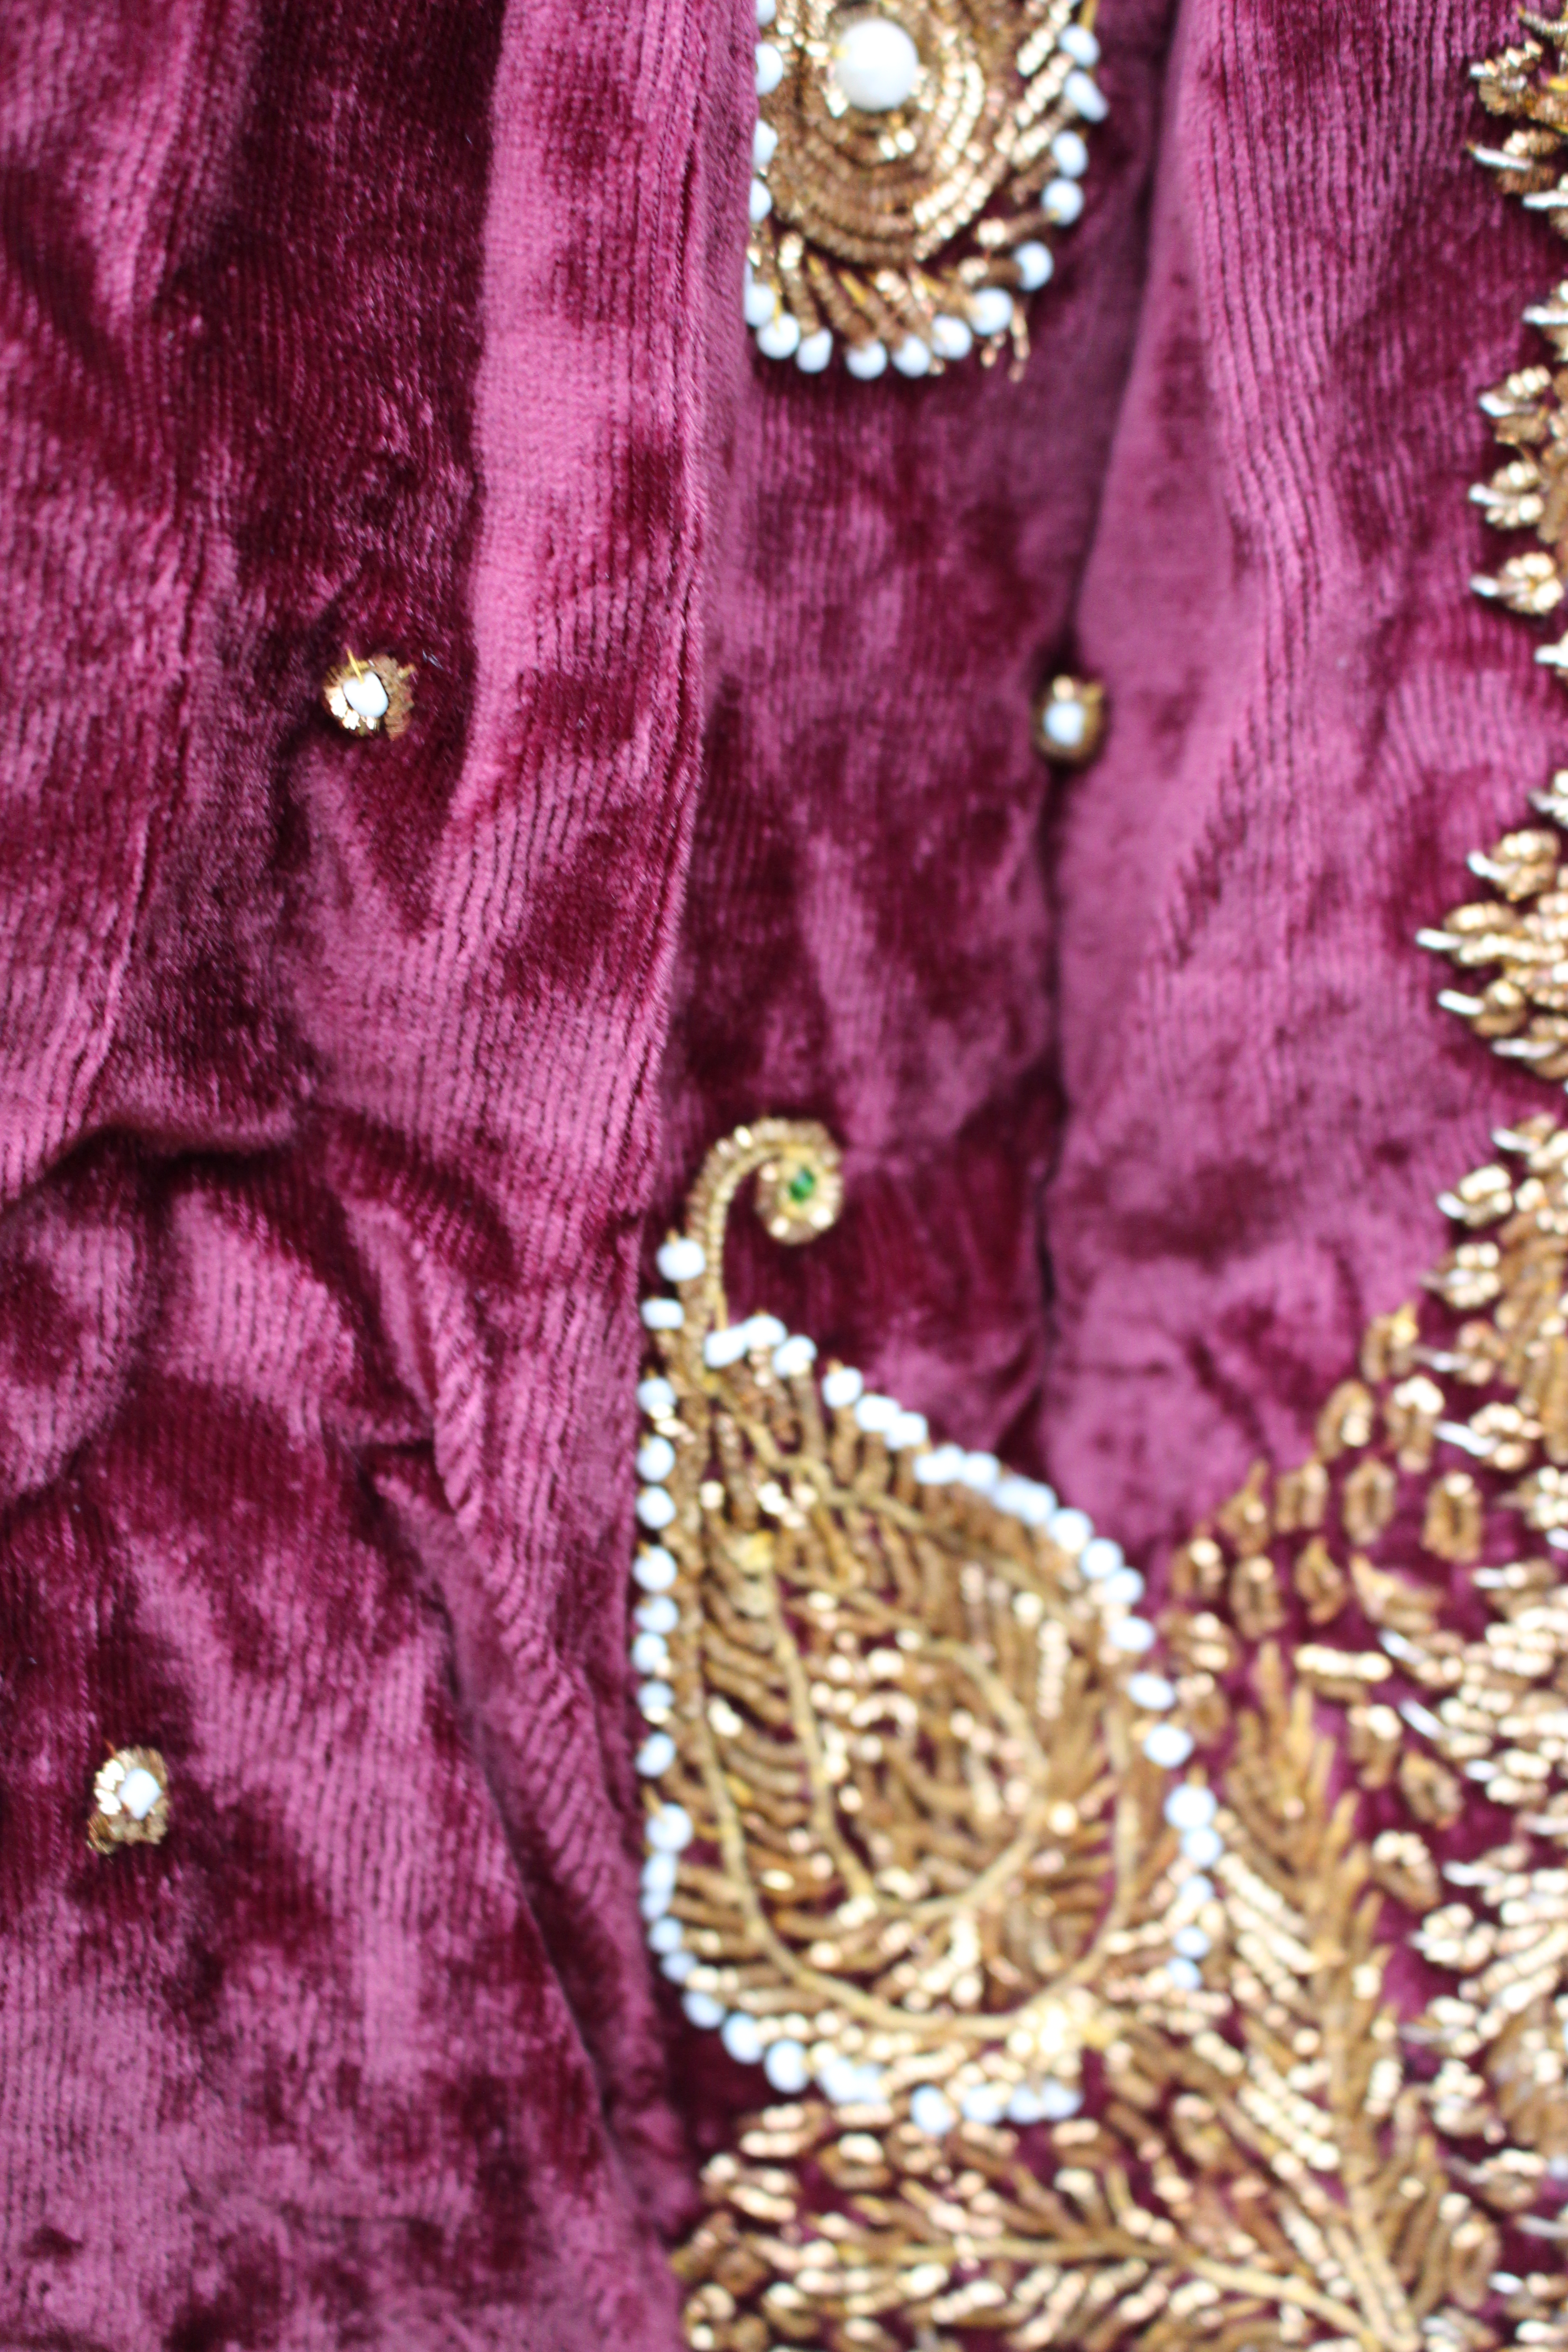 Maroon embroidered velvet Turkish cape